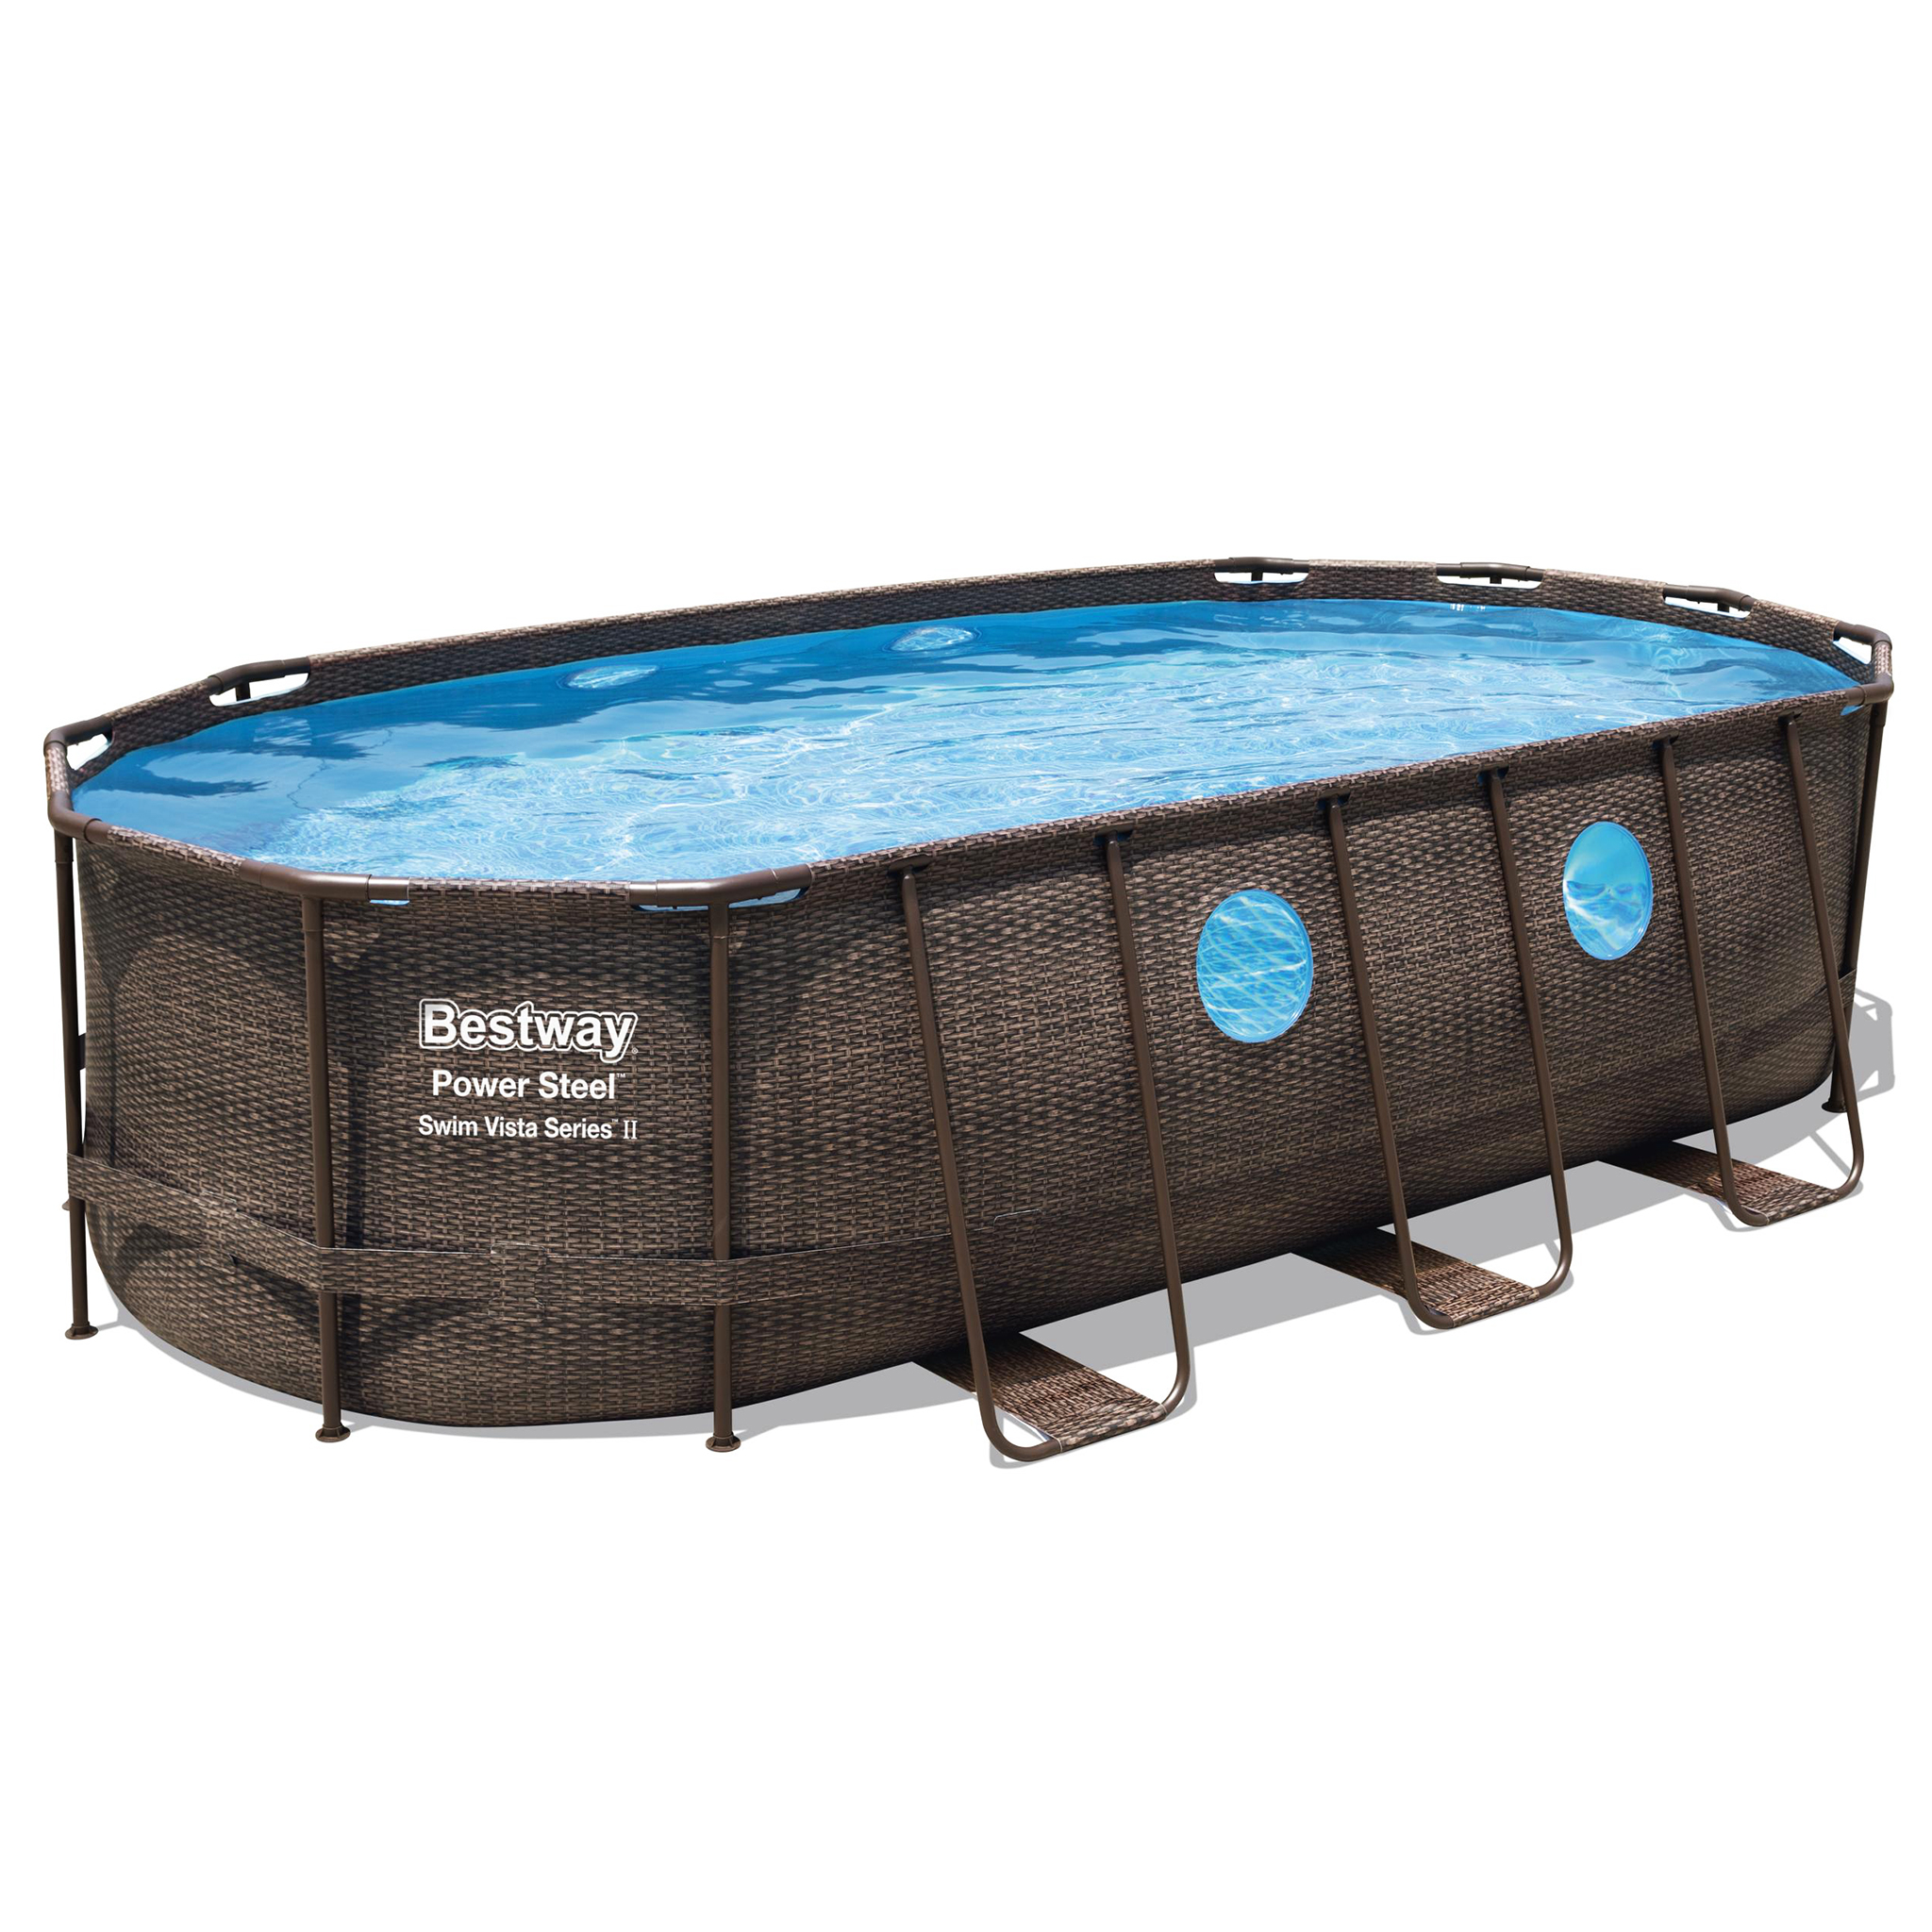 Produktfoto för Bestway pool ovan mark 5,5x2,7m | Power Steel Swim Vista II (56716)